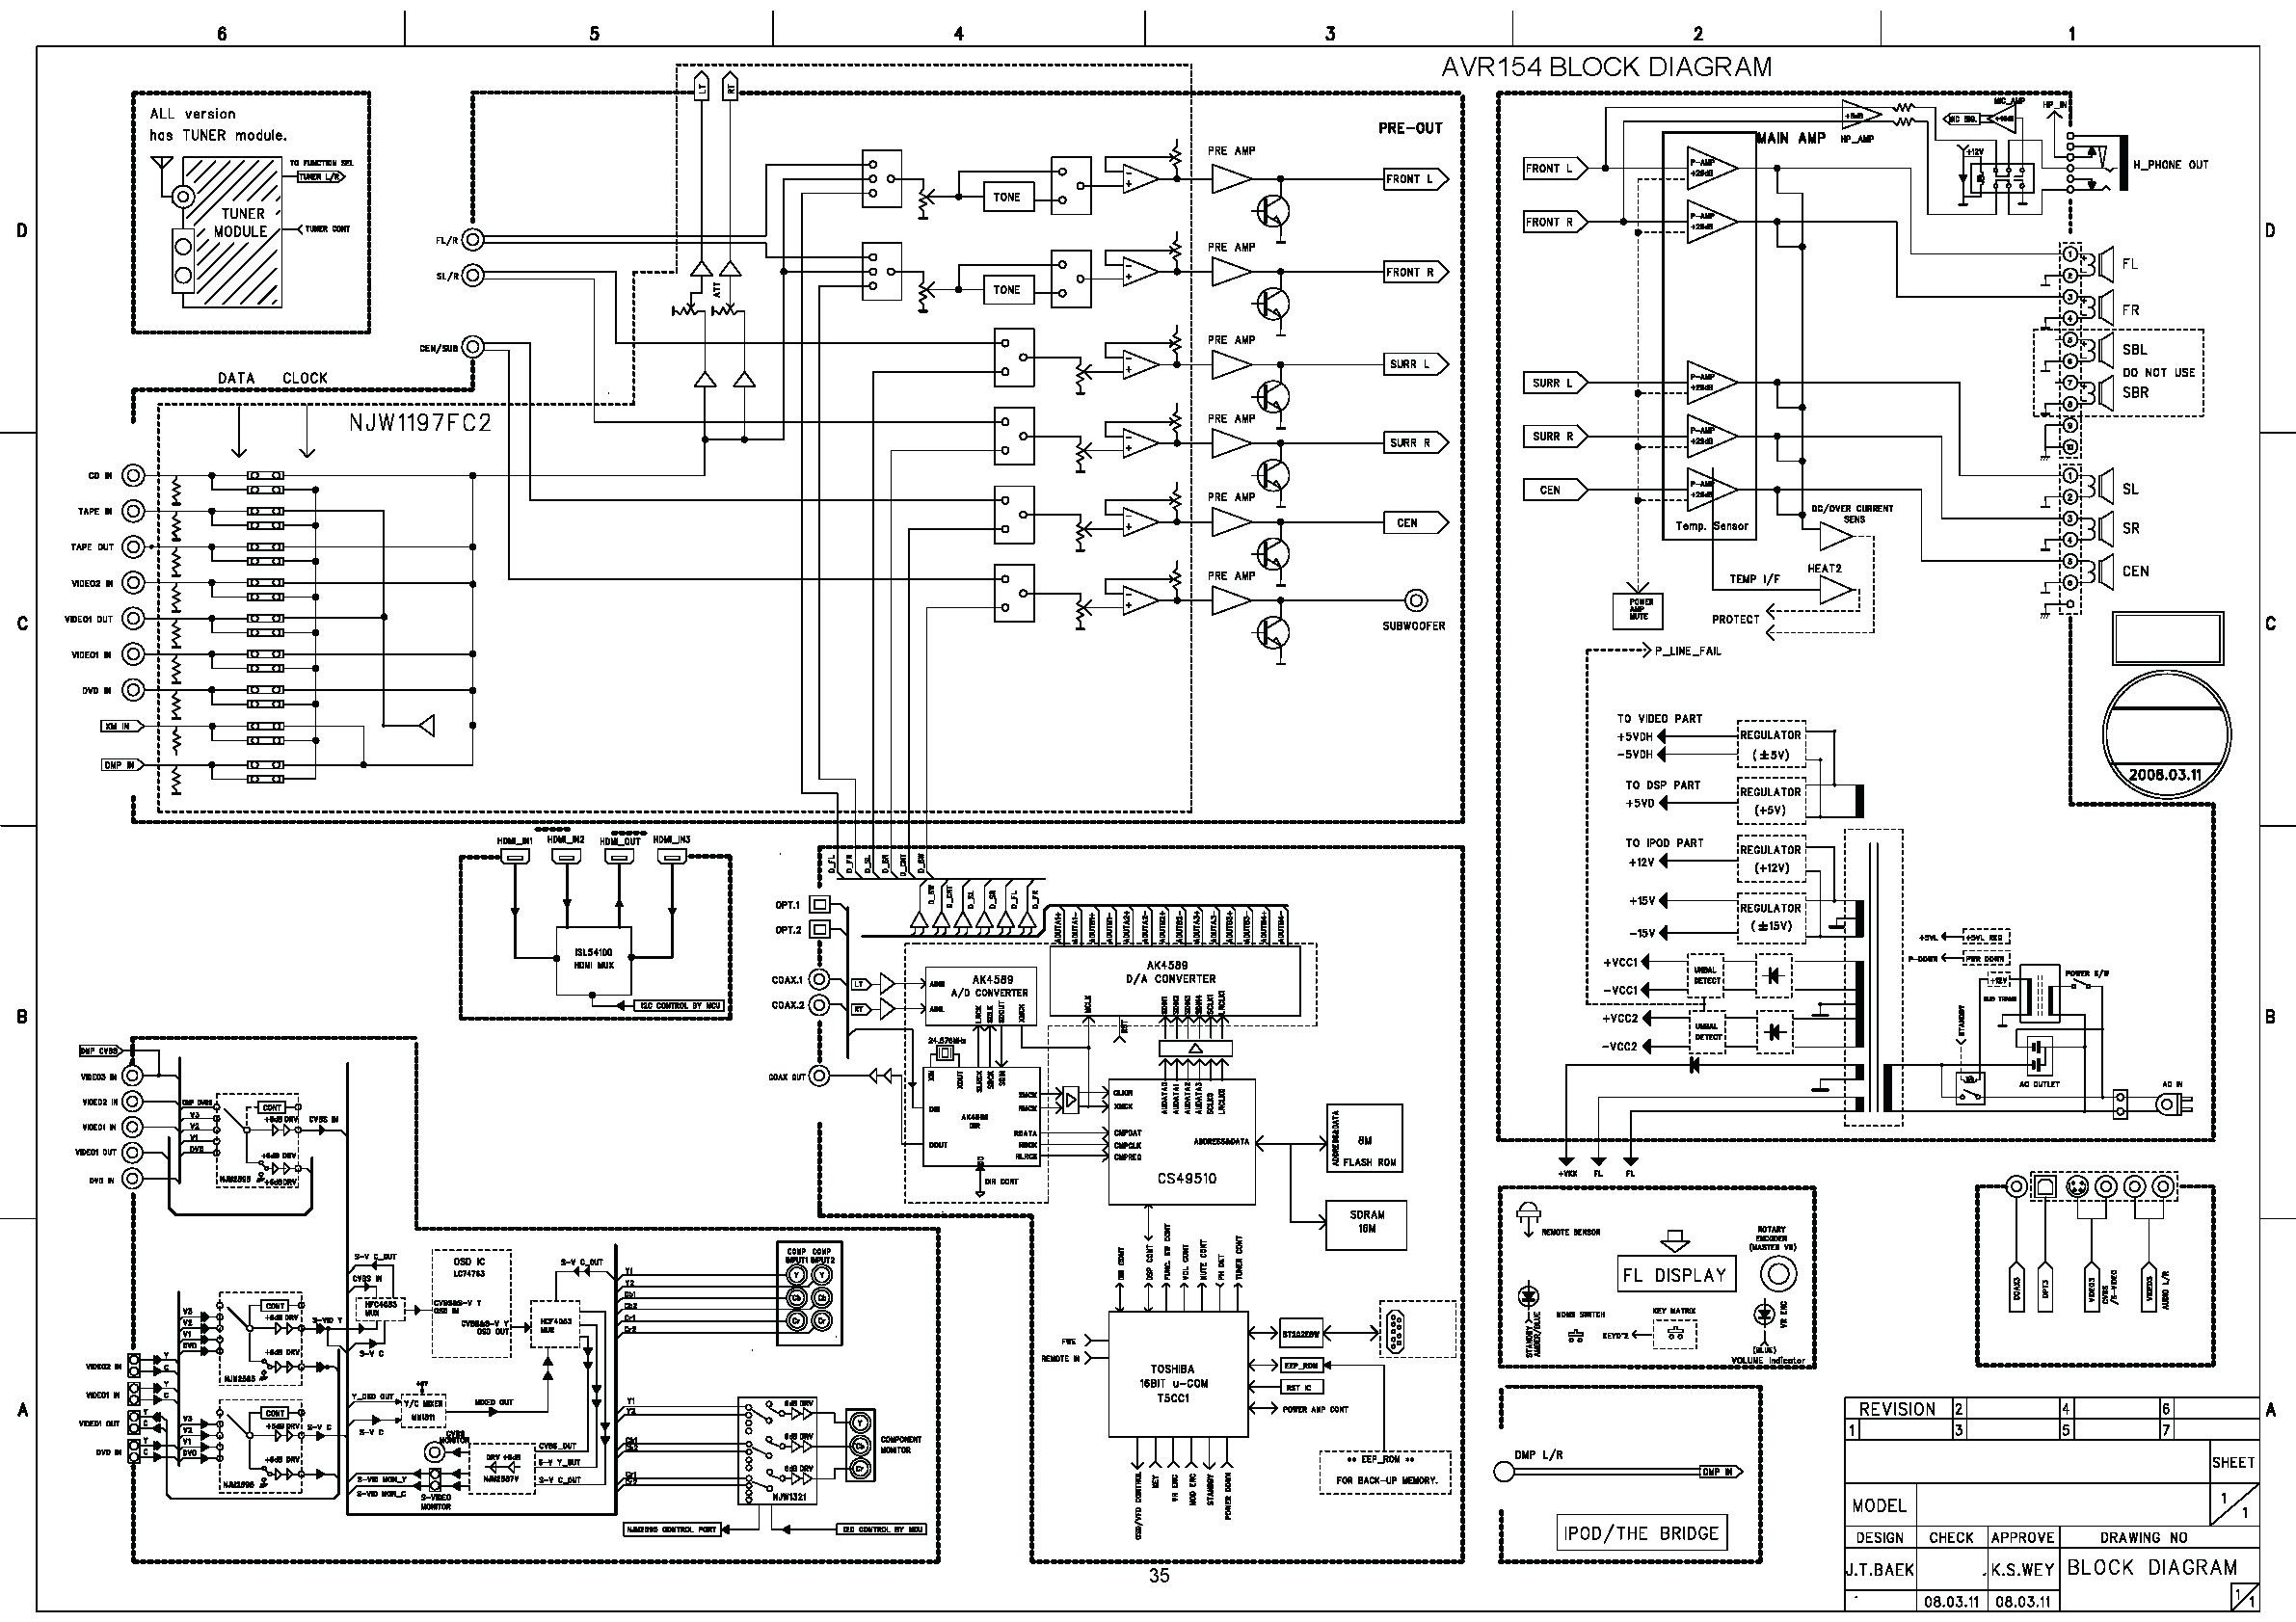 Honda Element Engine Diagram Honda Element Audio Wiring Diagram Inspiring Stereo Best Of Honda Element Engine Diagram